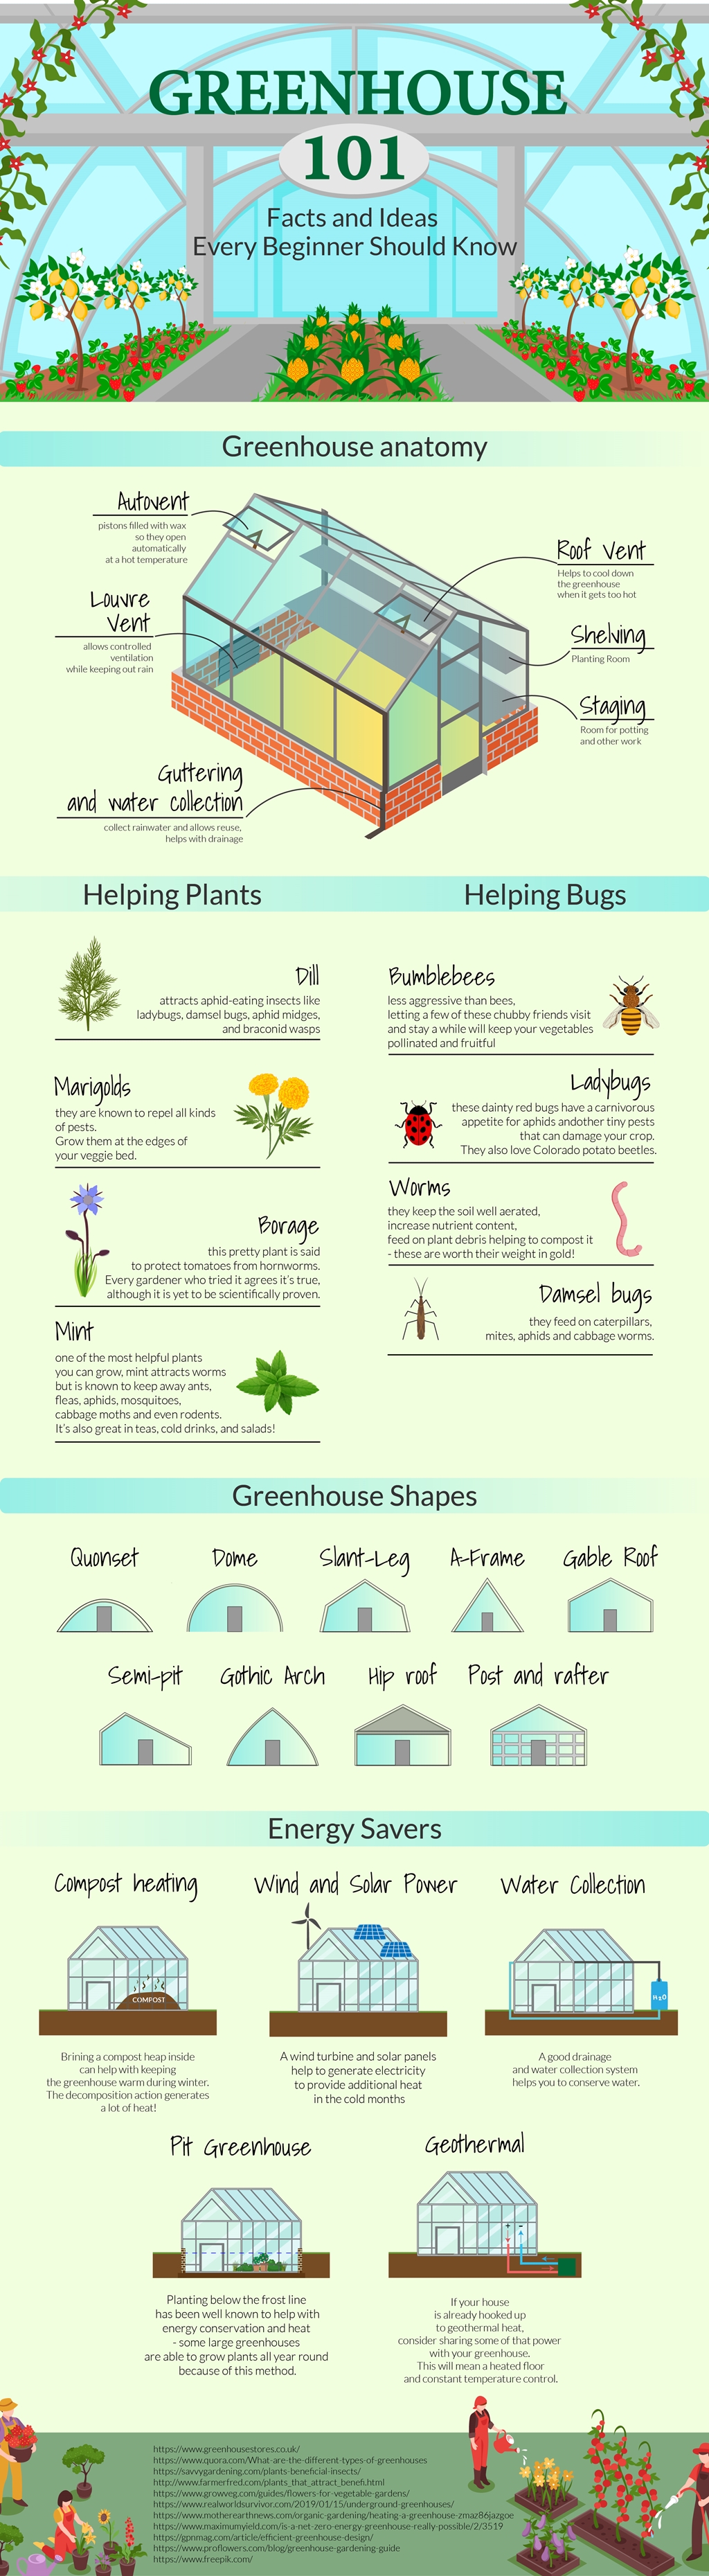 Greenhouse-infographic